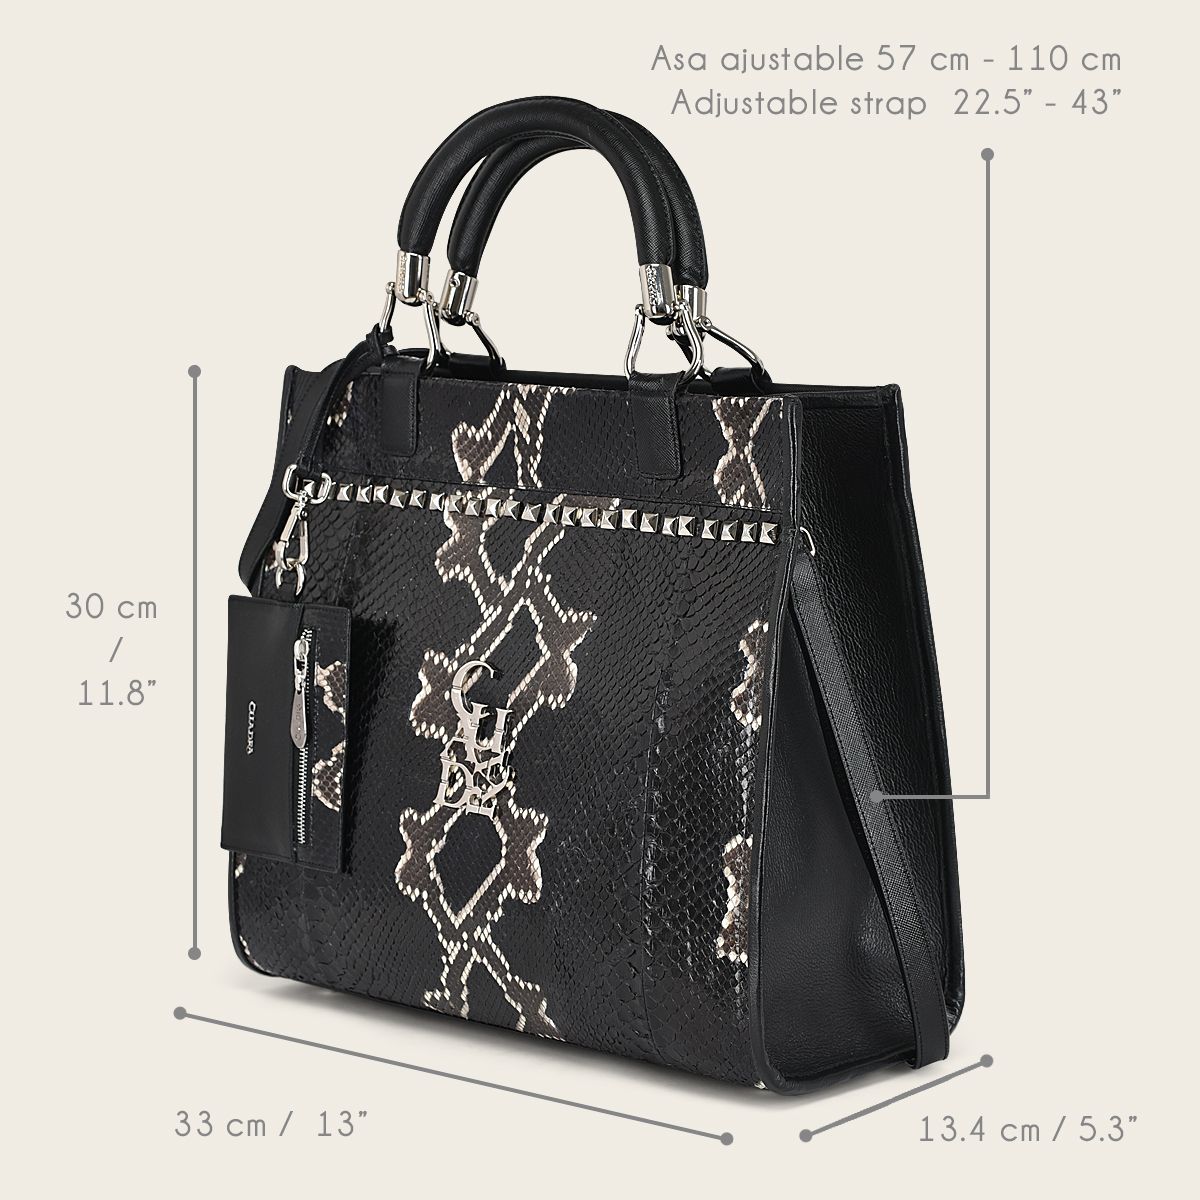 Full exotic black leather handbag